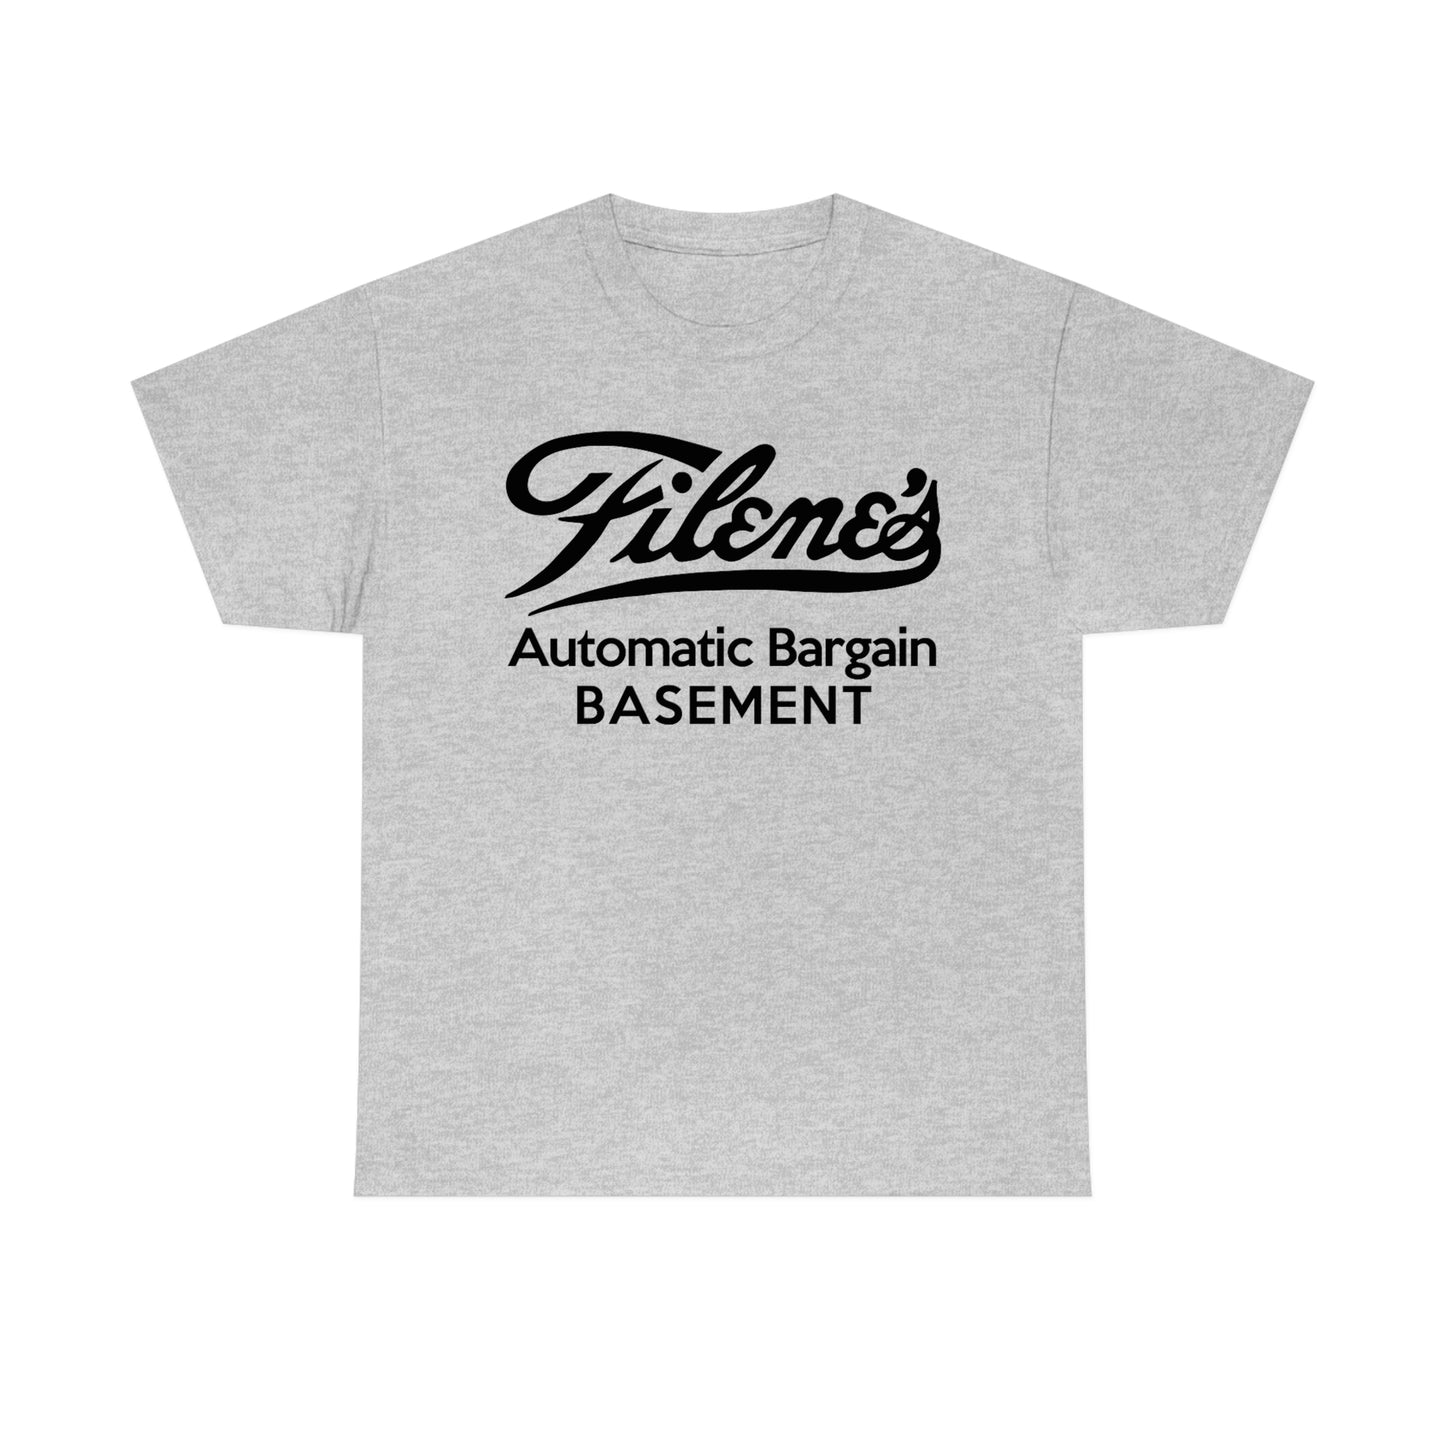 Filene's Basement T-Shirt